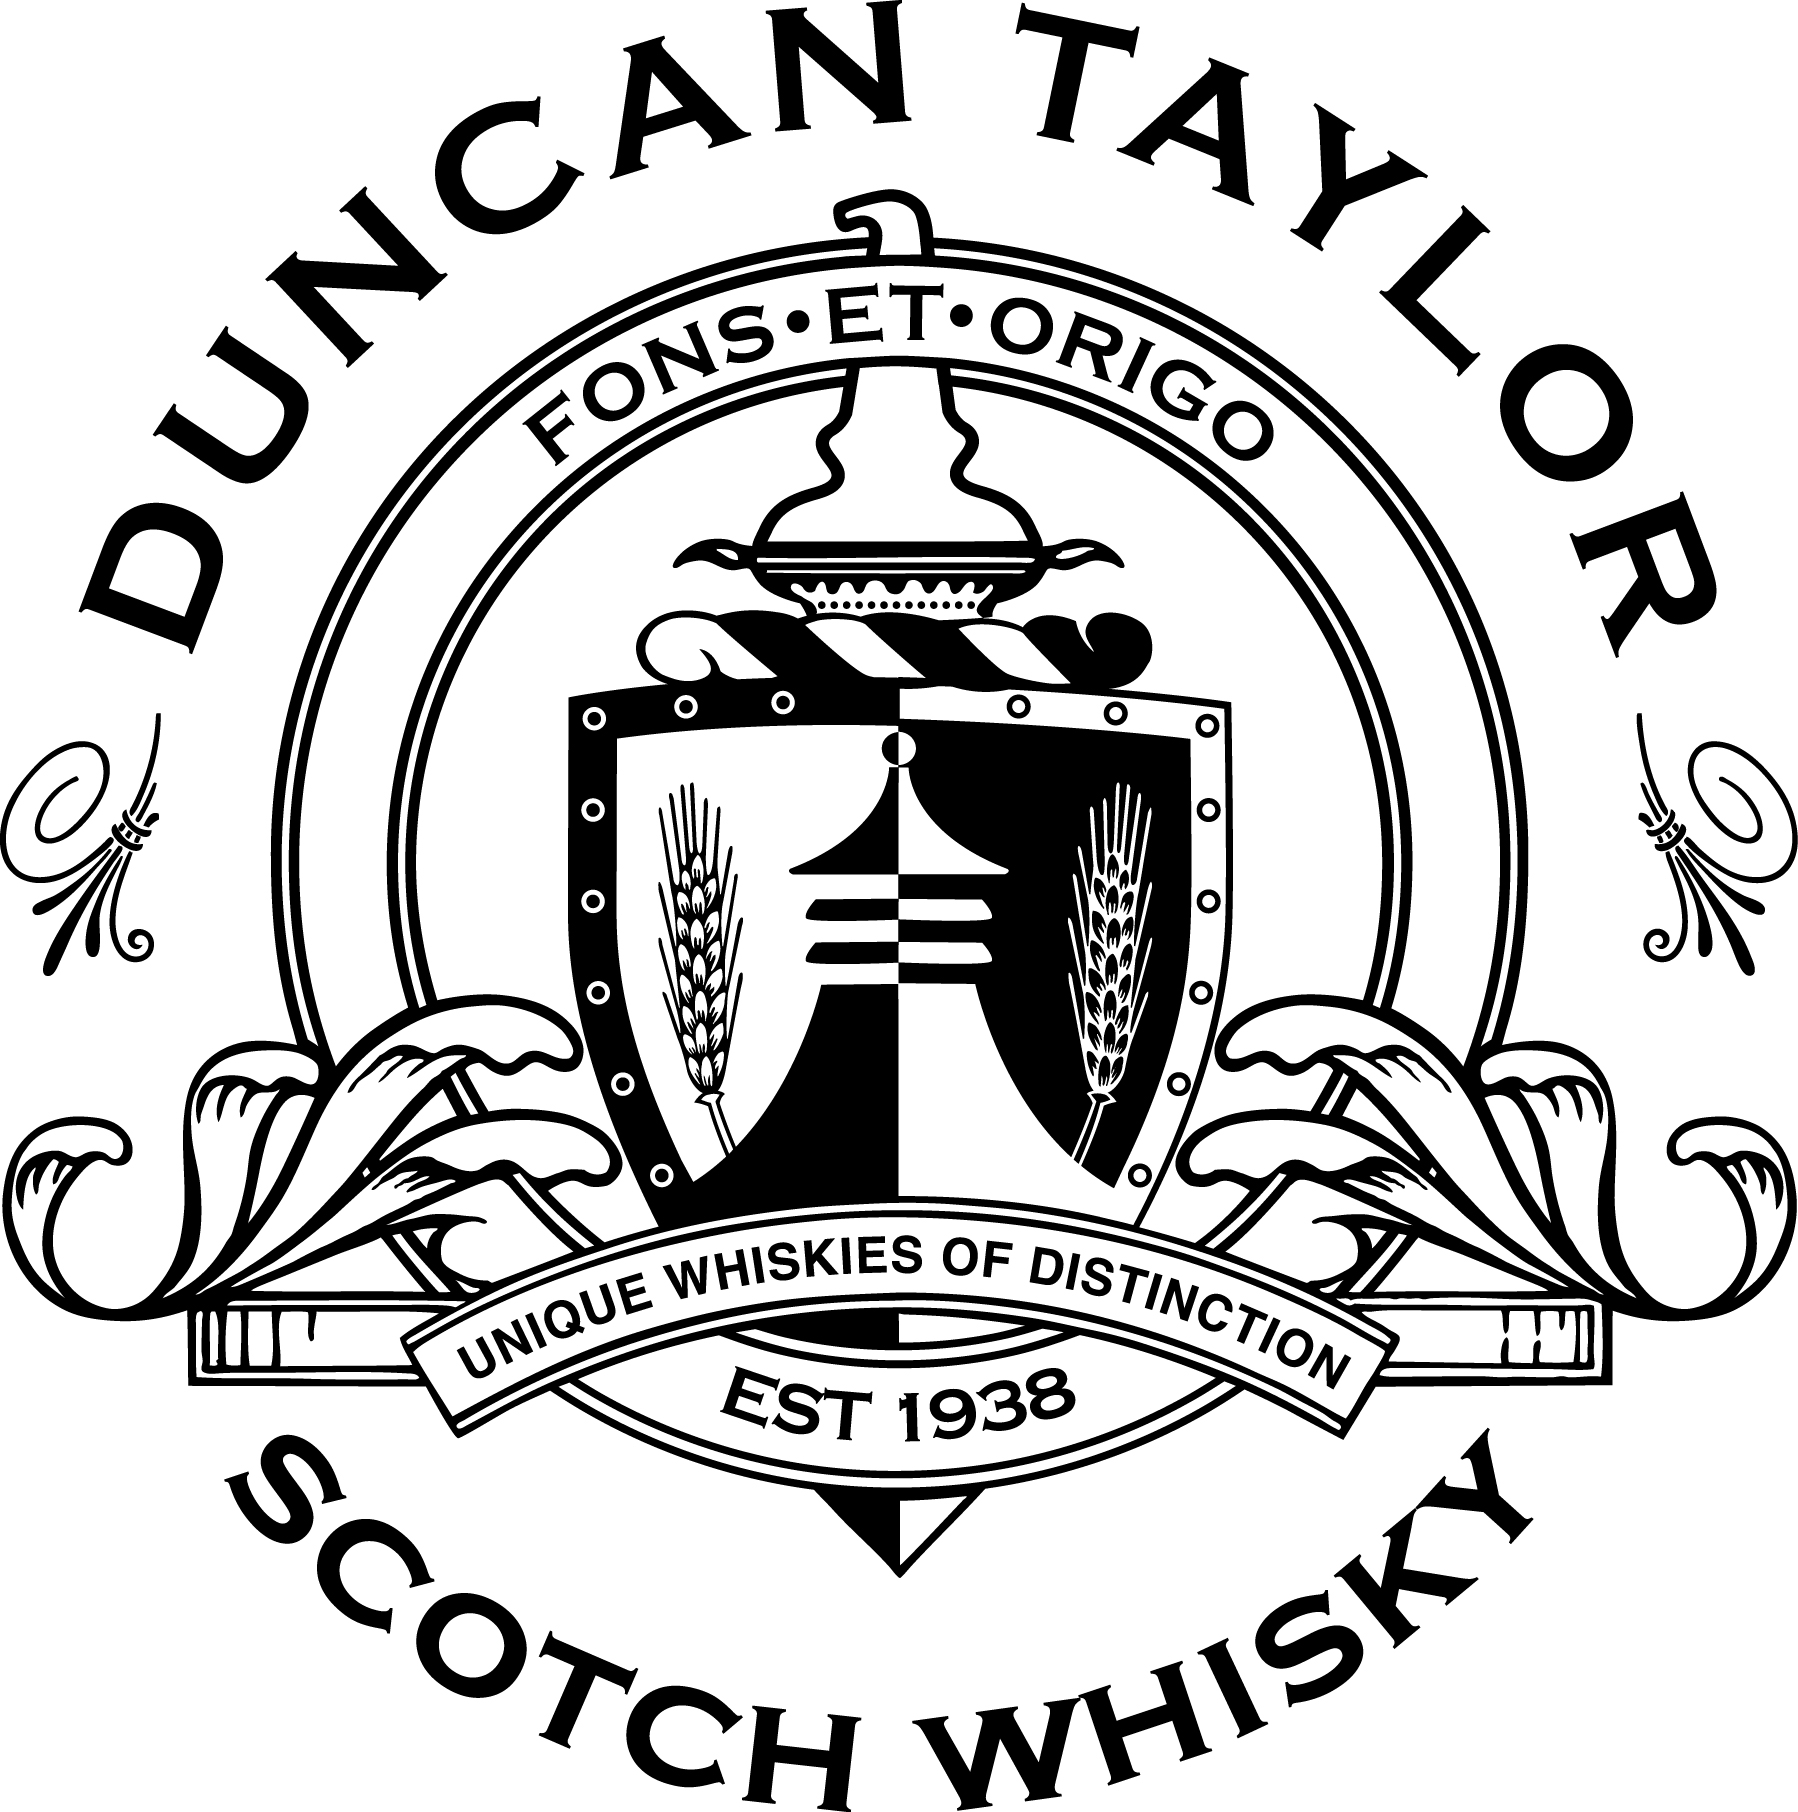 Duncan Taylor & Co.